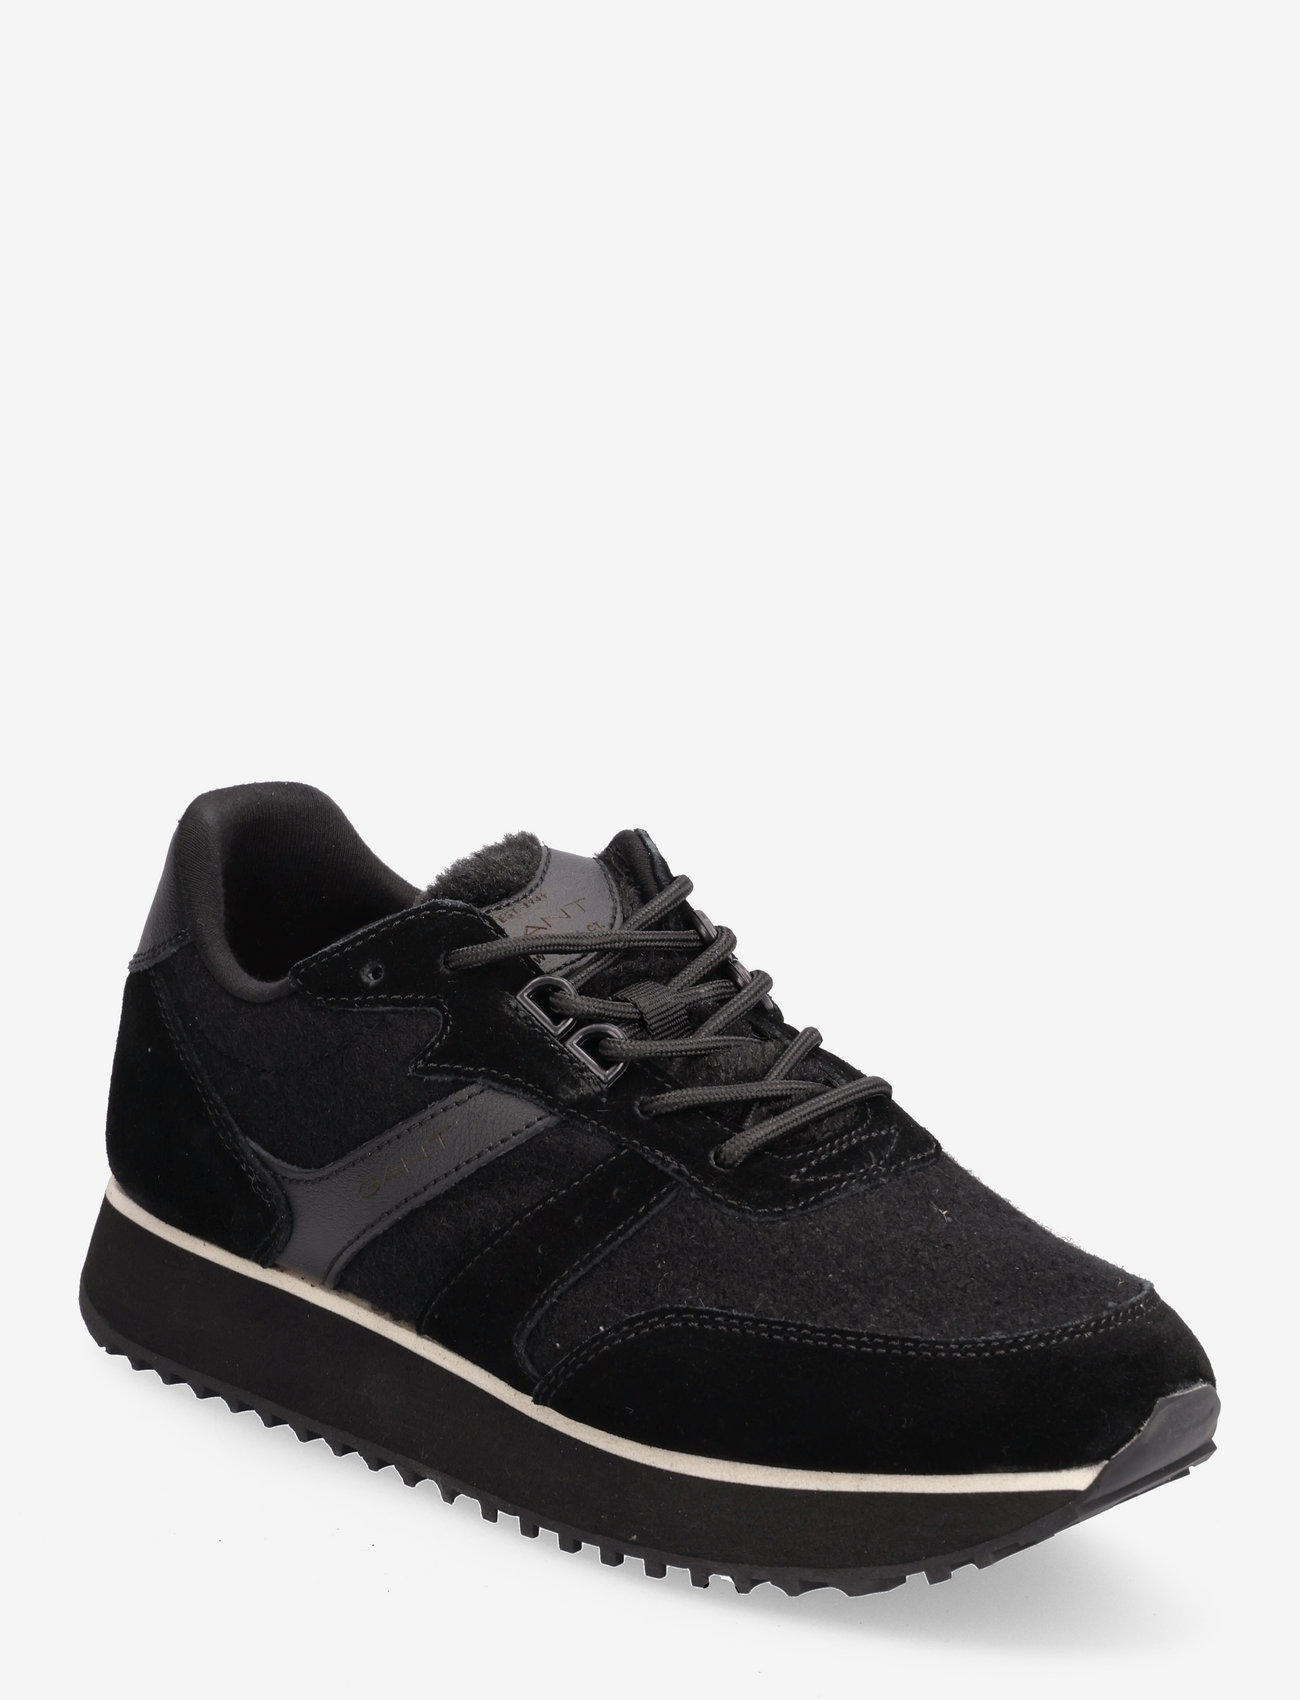 GANT - Bevinda Sneaker - lave sneakers - black - 0